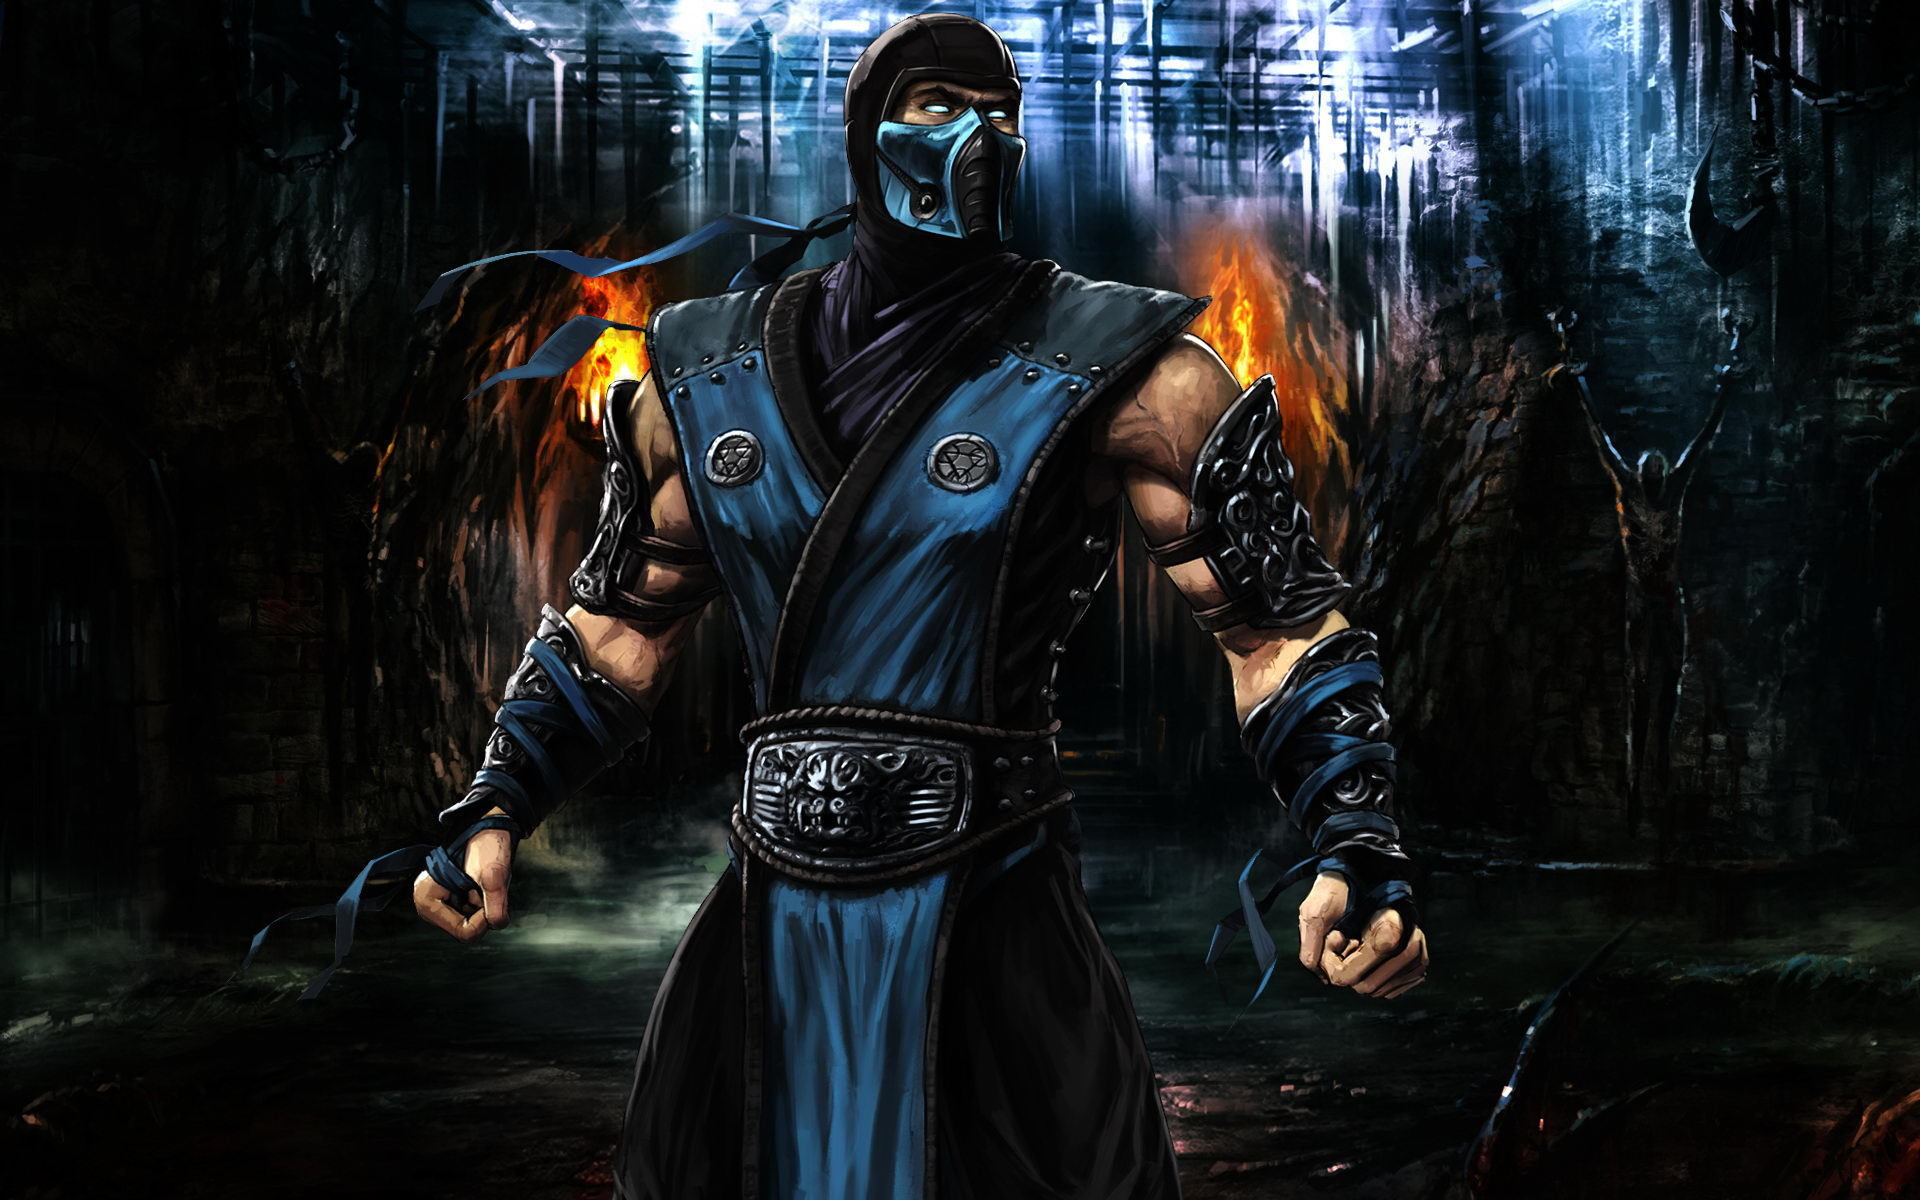 Papeis de parede Mortal Kombat Jogos baixar imagens